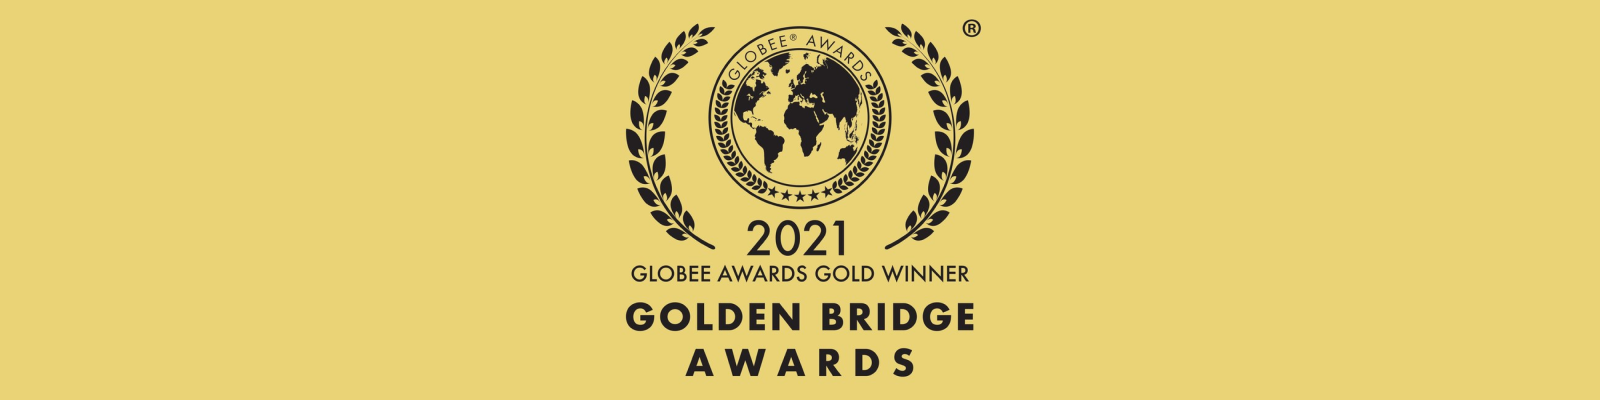 Verdigris Strikes Gold in Golden Bridge Awards